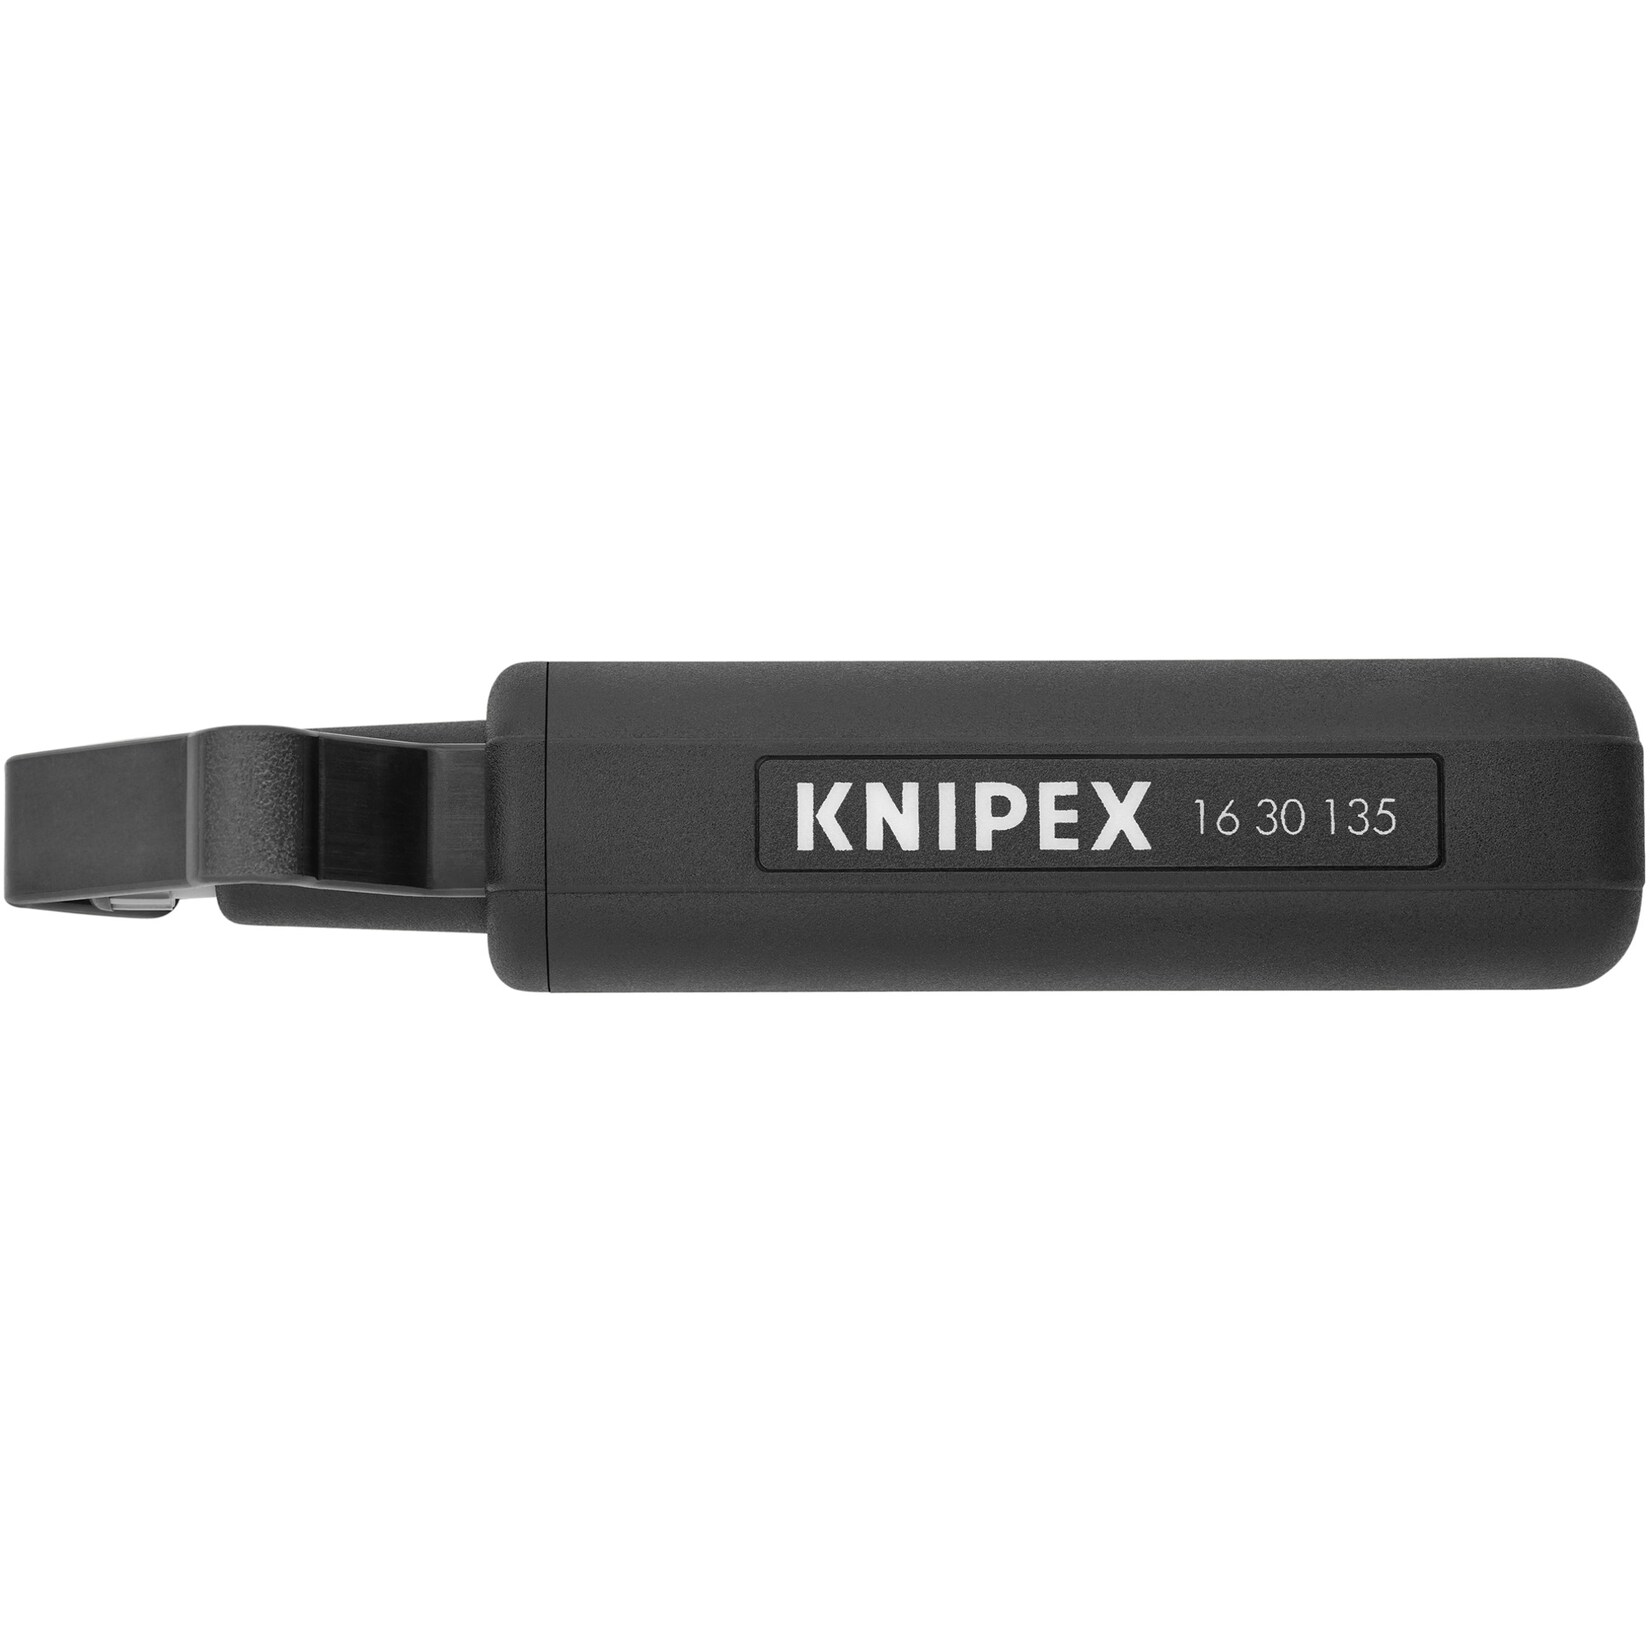 Knipex Abisolier-/ Abmantelungswerkzeug Abmantelungswerkzeug 16 30 135 SB